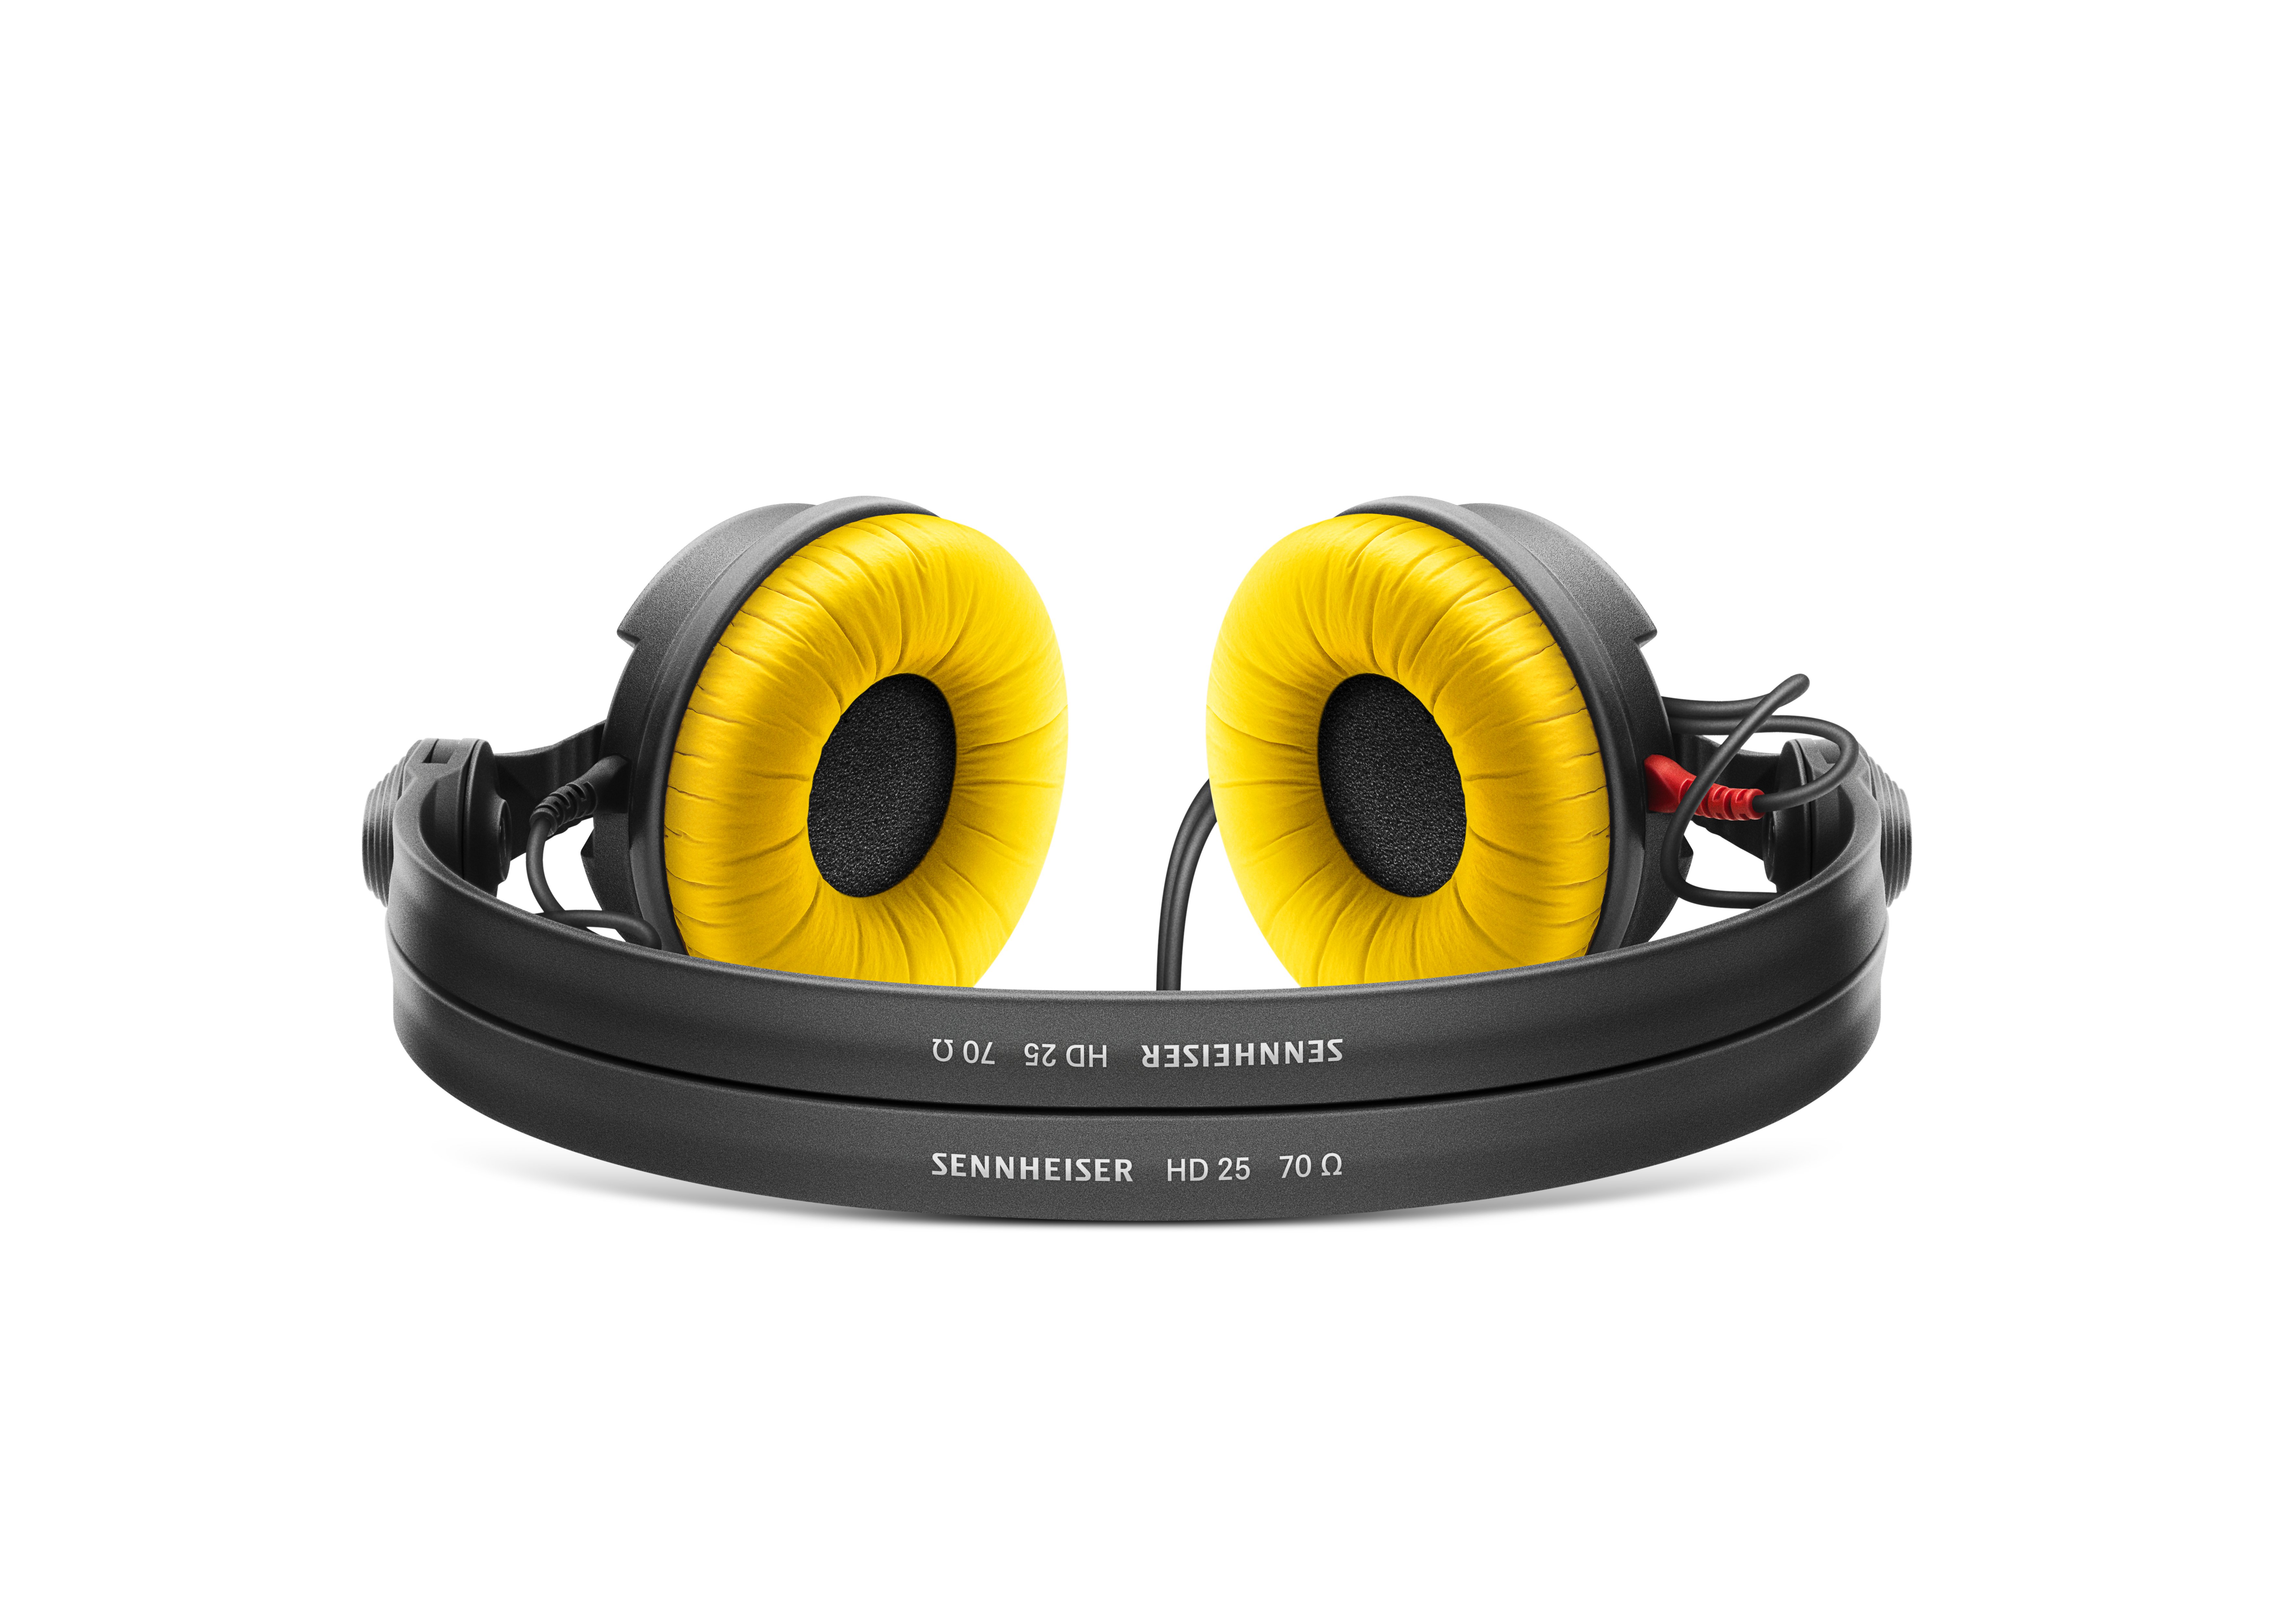 Sennheiser HD 25 – discounted, limited edition, retro headphones